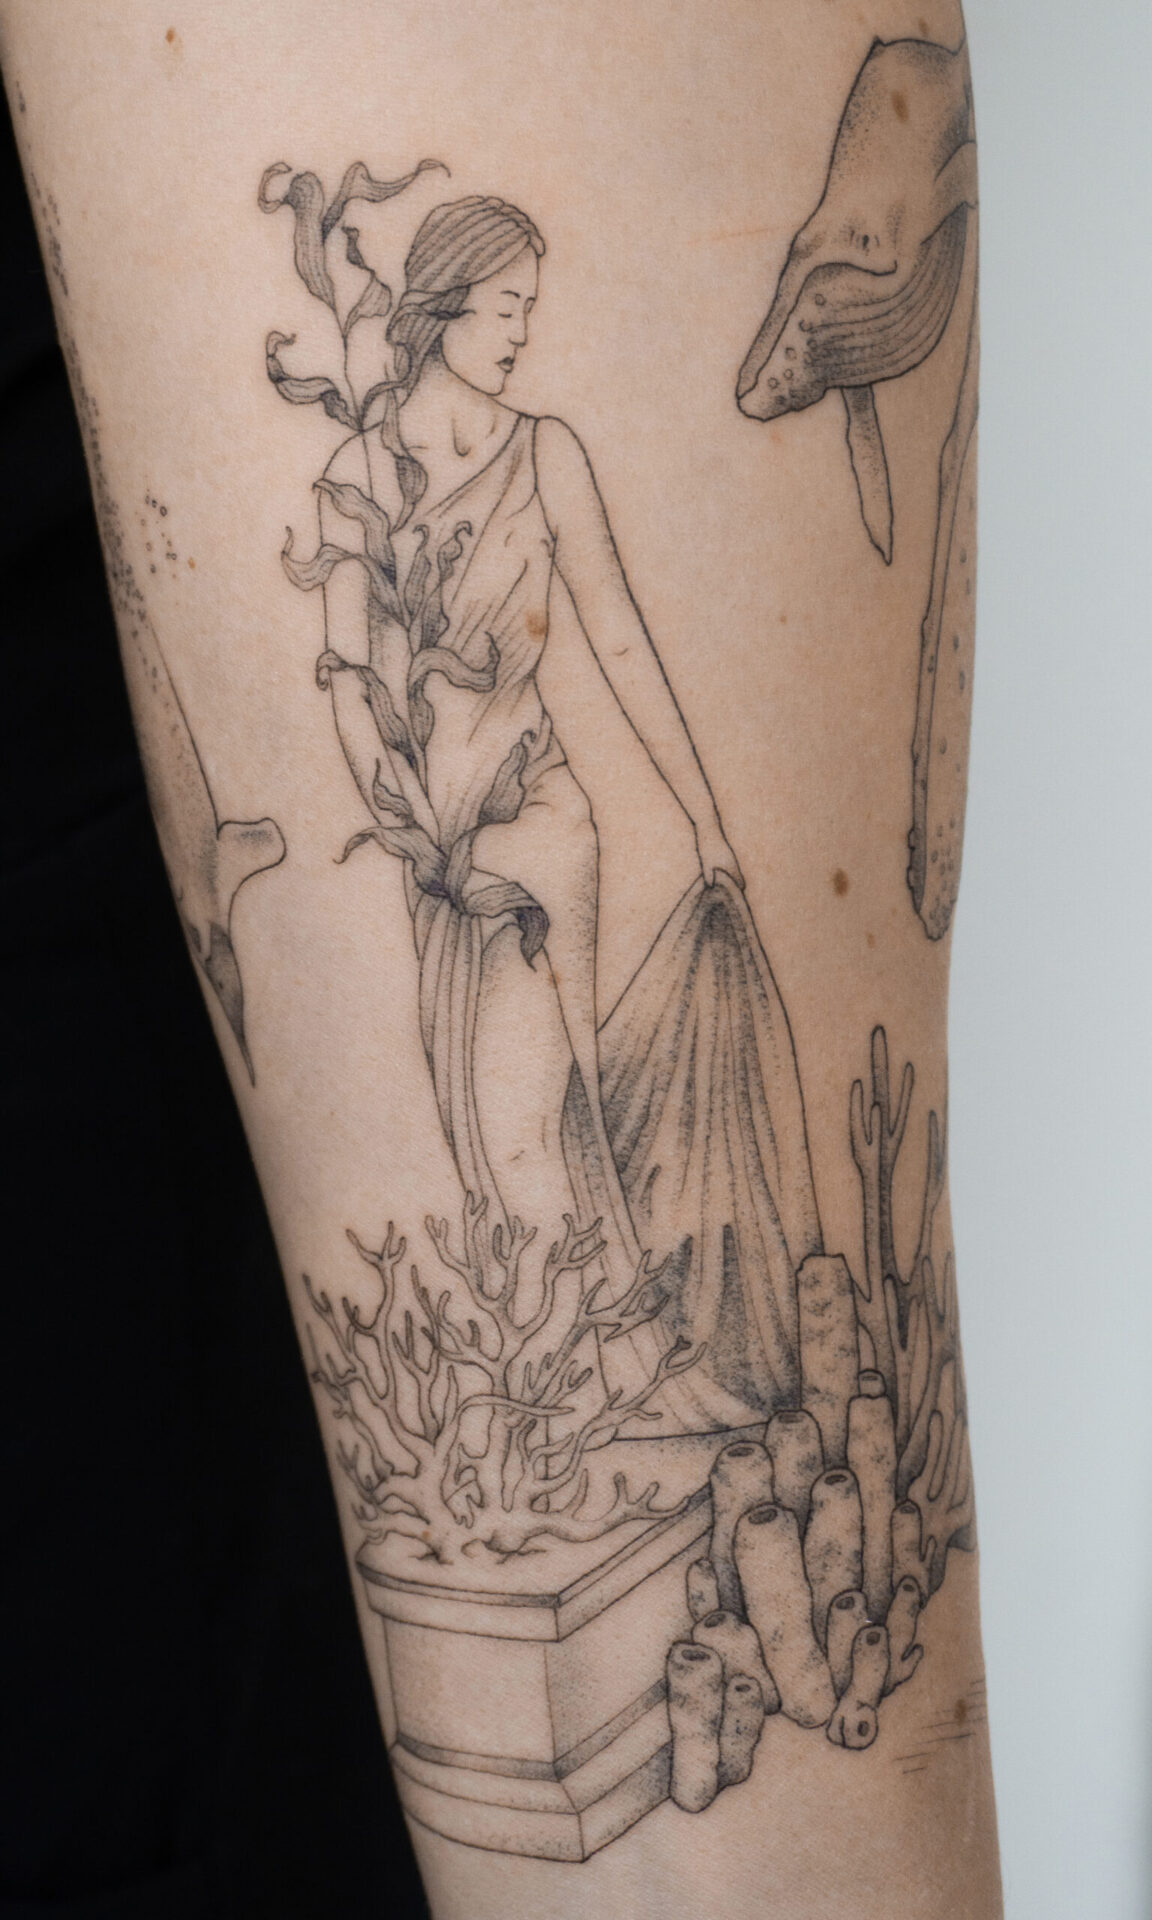 forearm fineline woman statue underwater tattoo from smasli ink an female tattoo artist working in salzburg austria